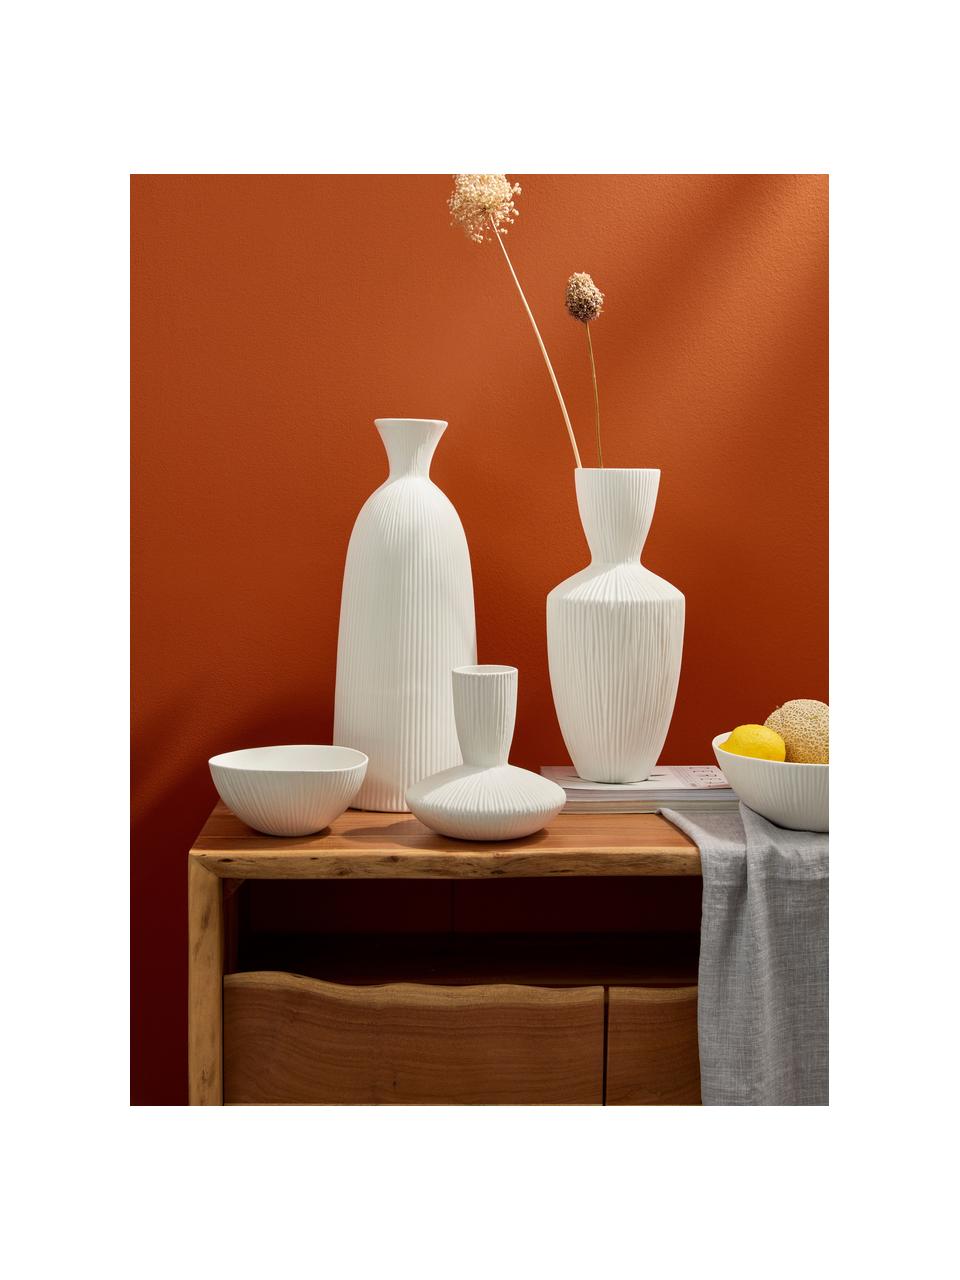 Keramik-Vase Striped, H 47 cm, Keramik, Weiss, Ø 21 x H 47 cm